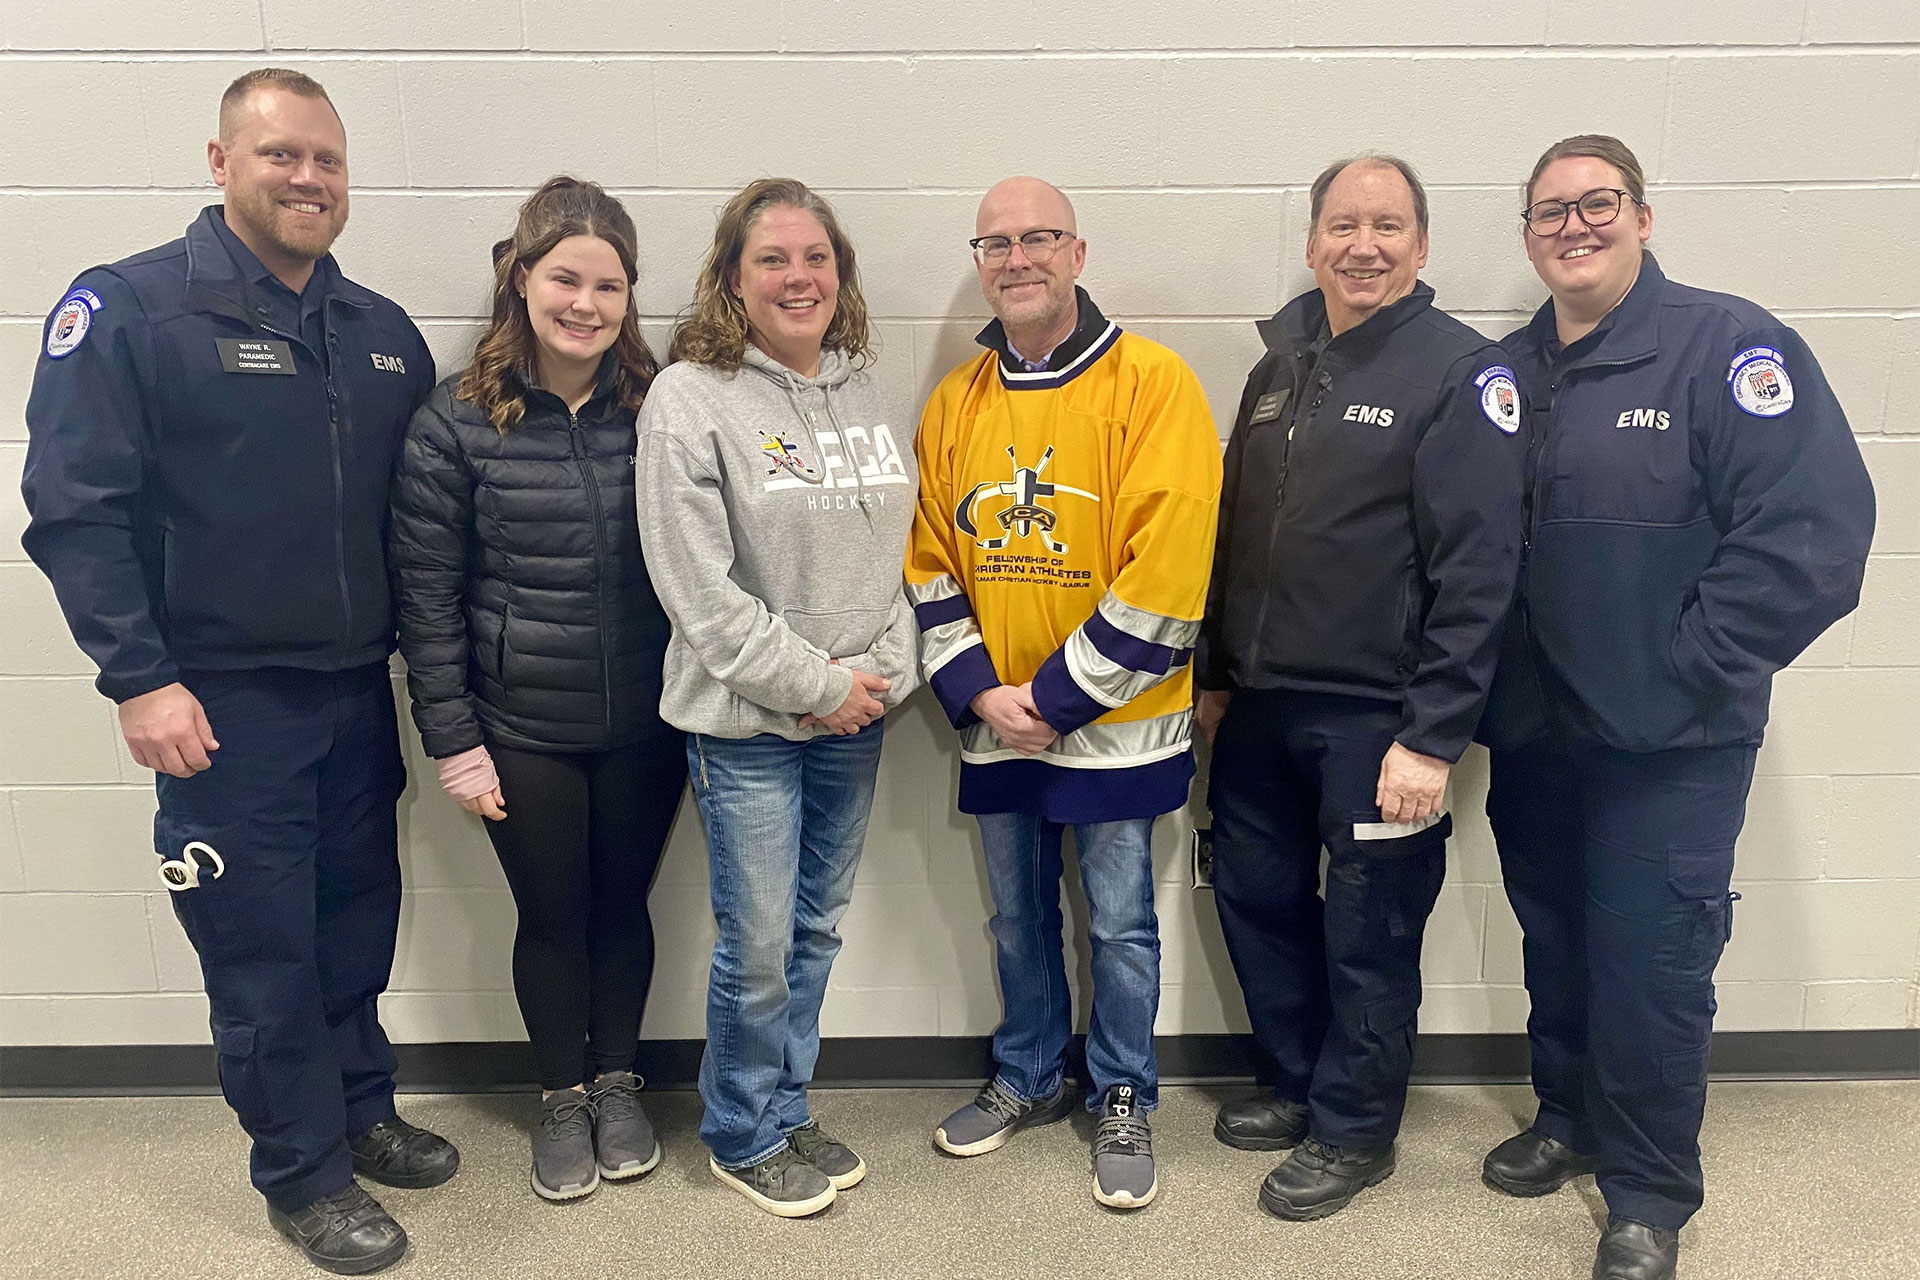 Heartwarming Heroics: Former EMT Recognized for Saving Hockey Player's Life